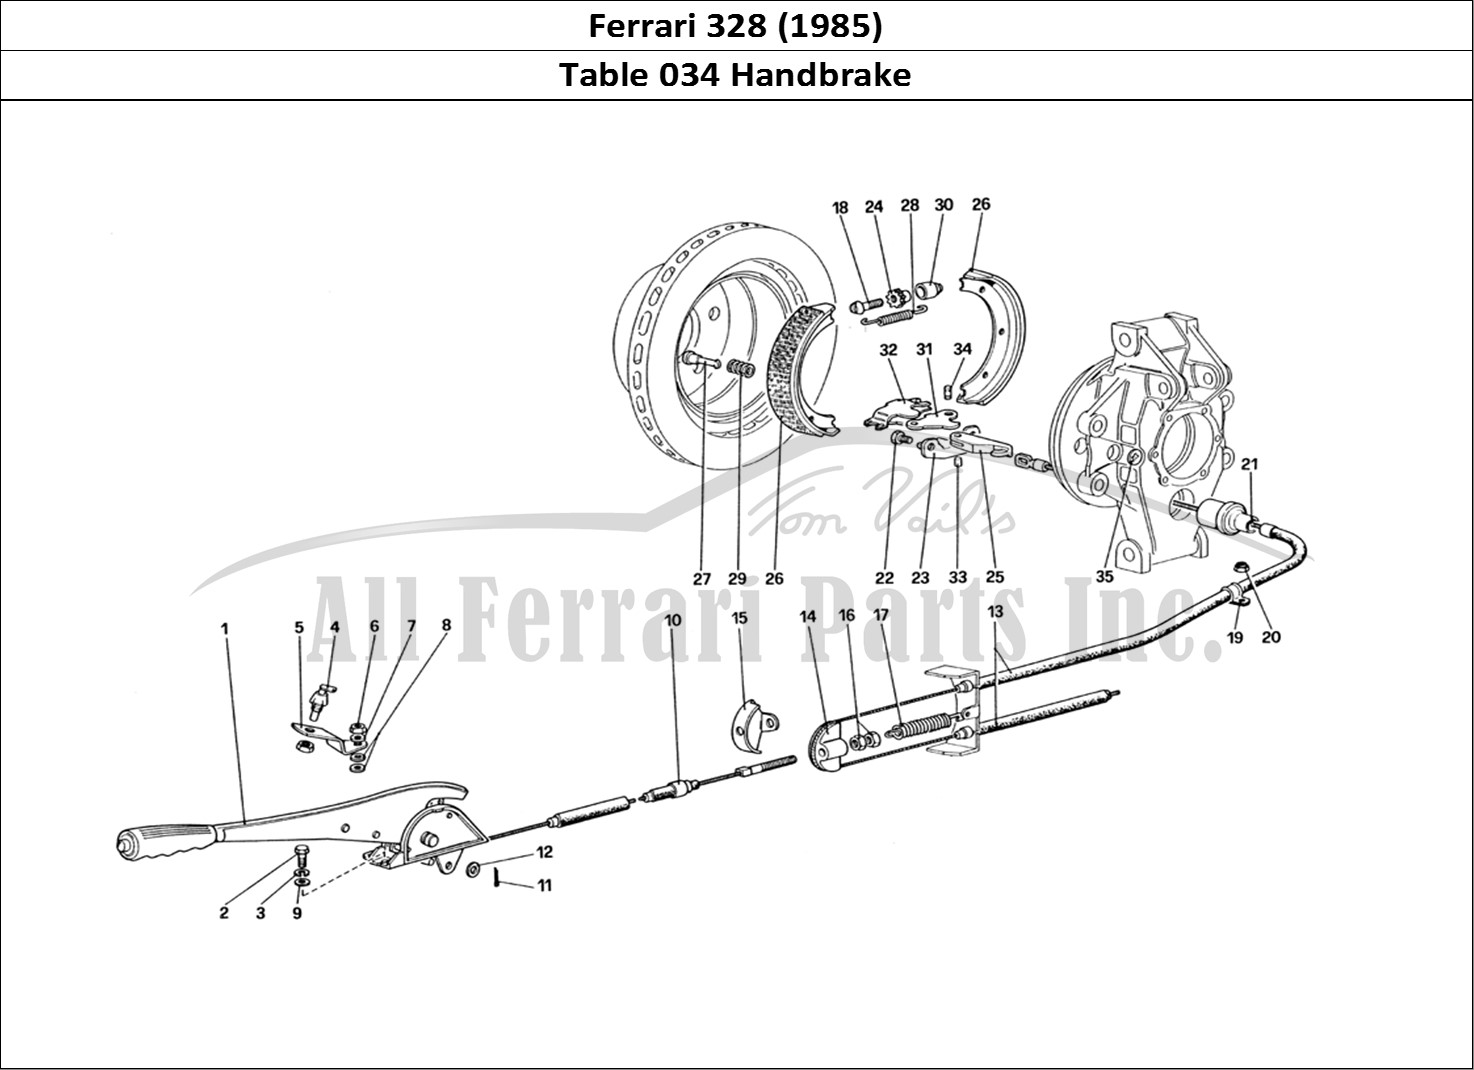 Ferrari Parts Ferrari 328 (1985) Page 034 Hand - Brake Control